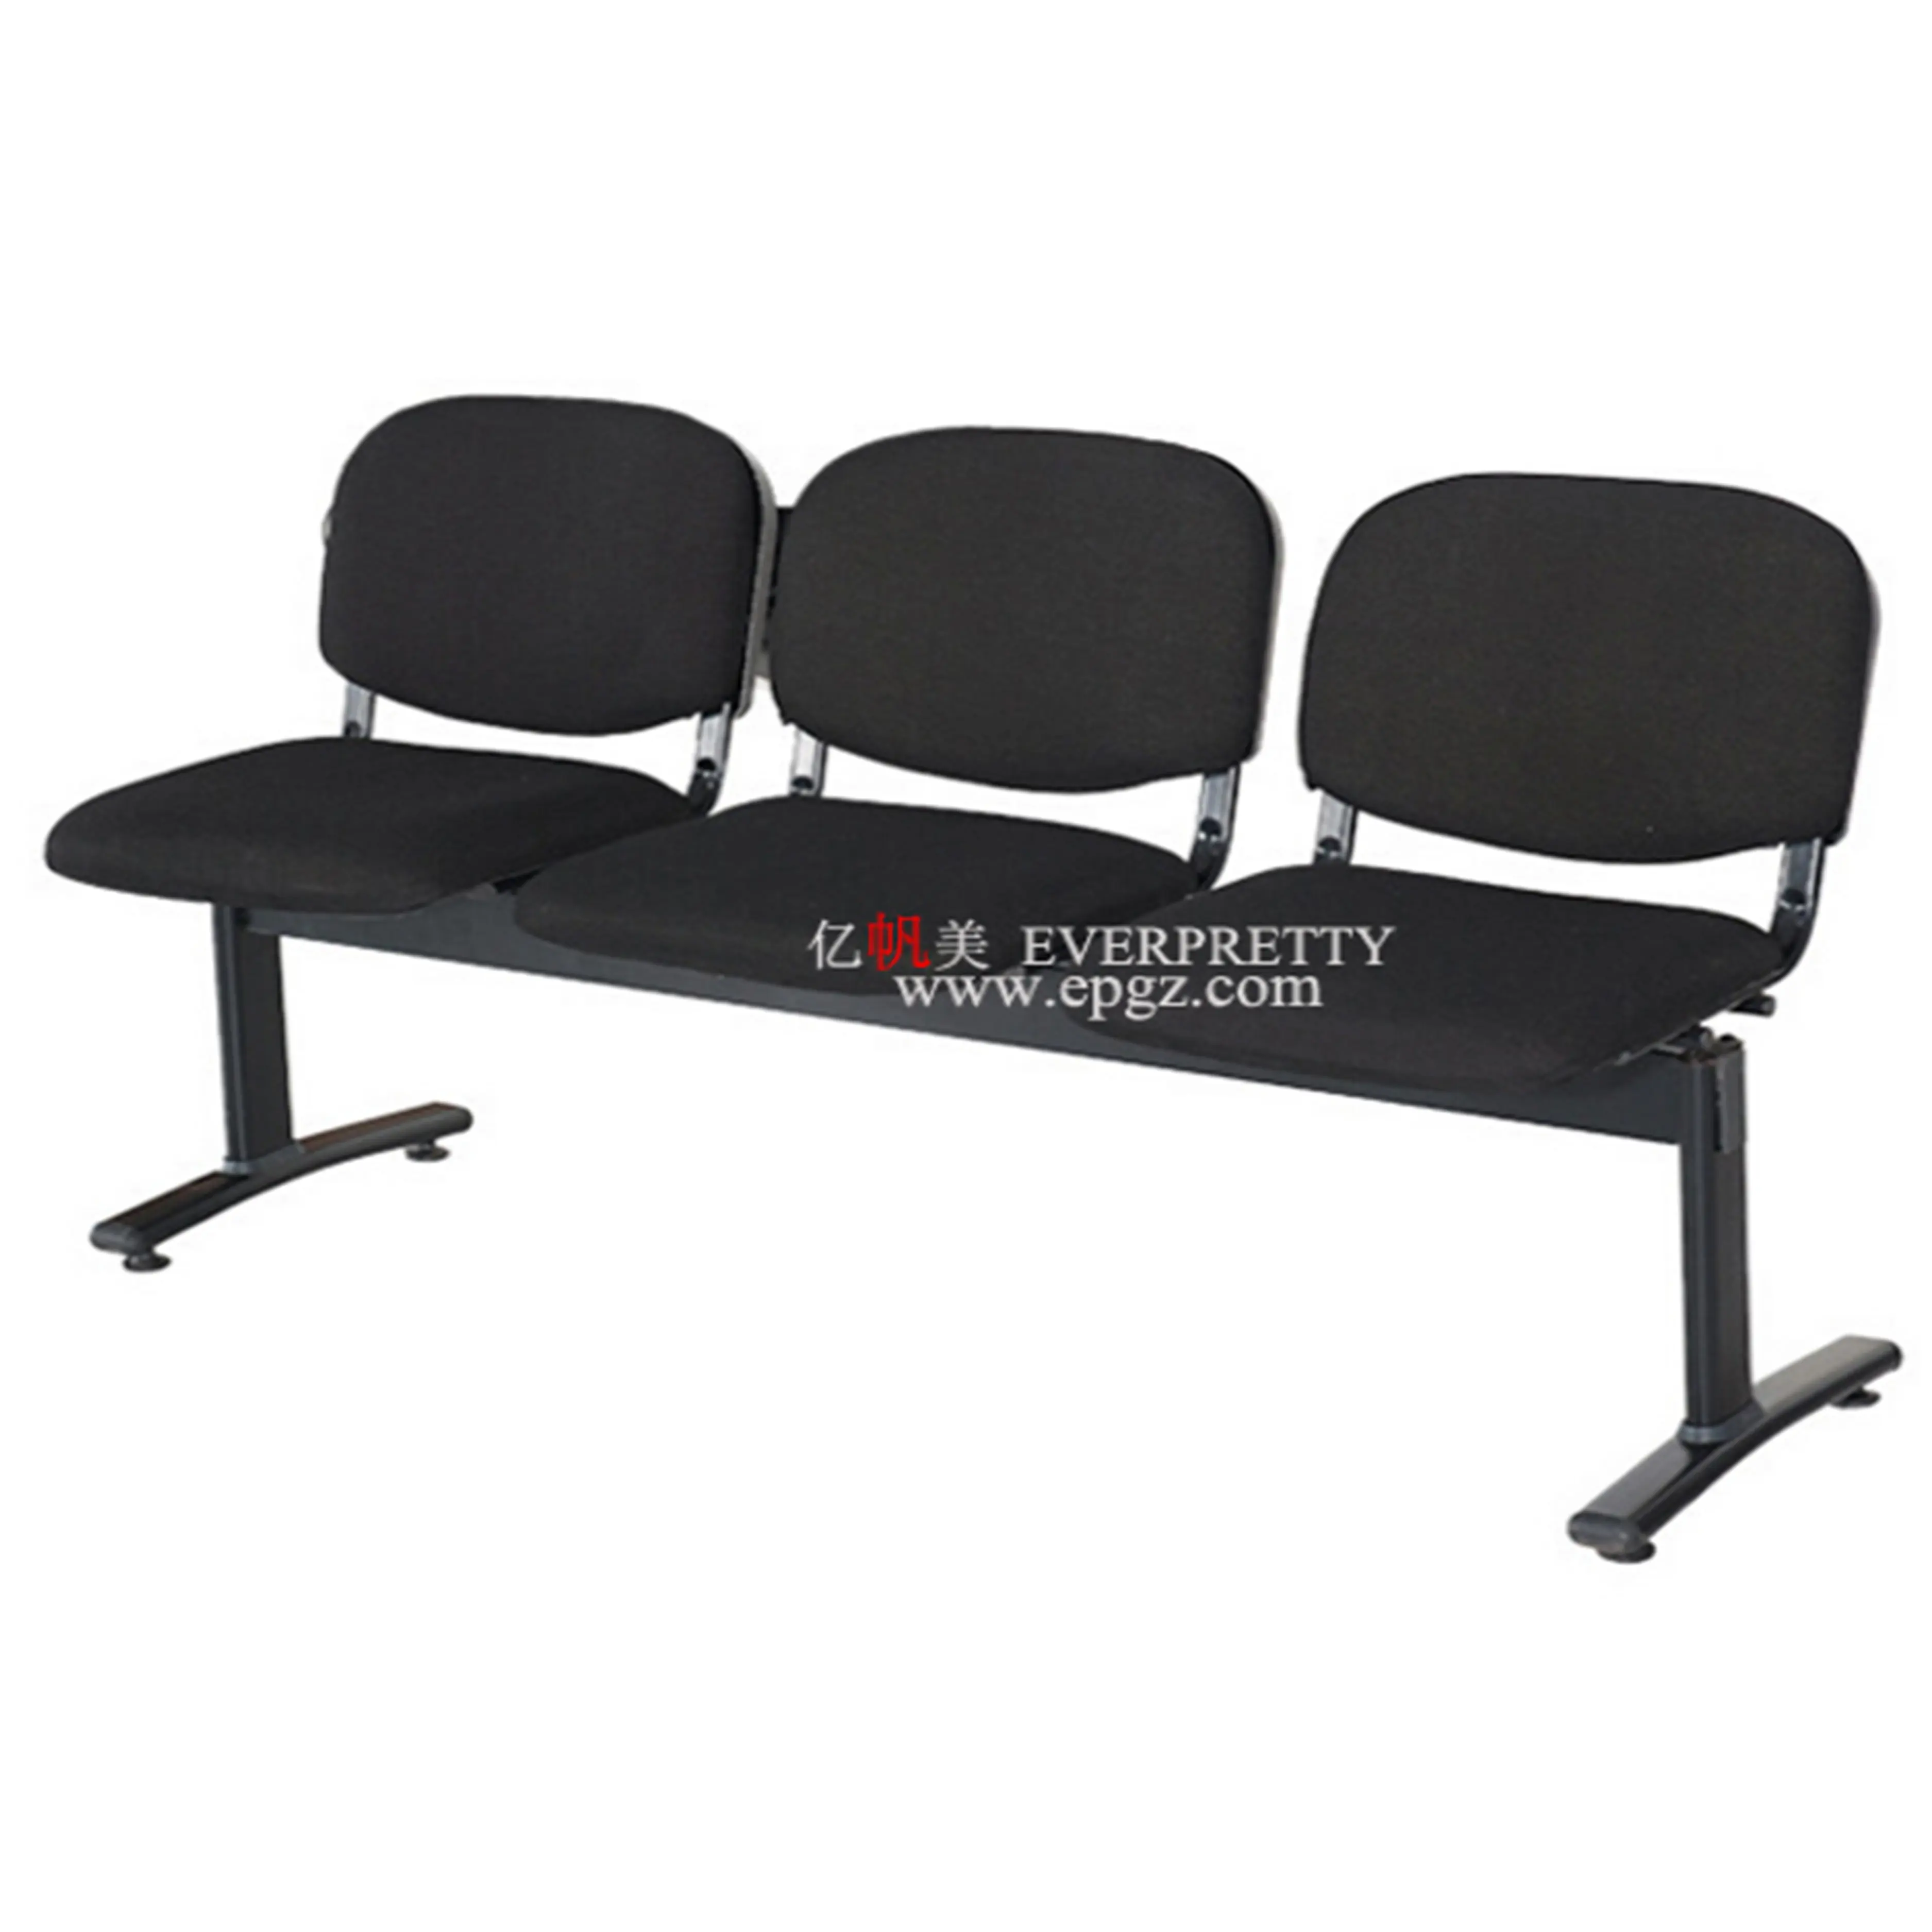 Modern 3 Seat Fabric Airport Waiting Chair, Comfortable Hospital Waiting Room Chairs, Waiting Room Furniture